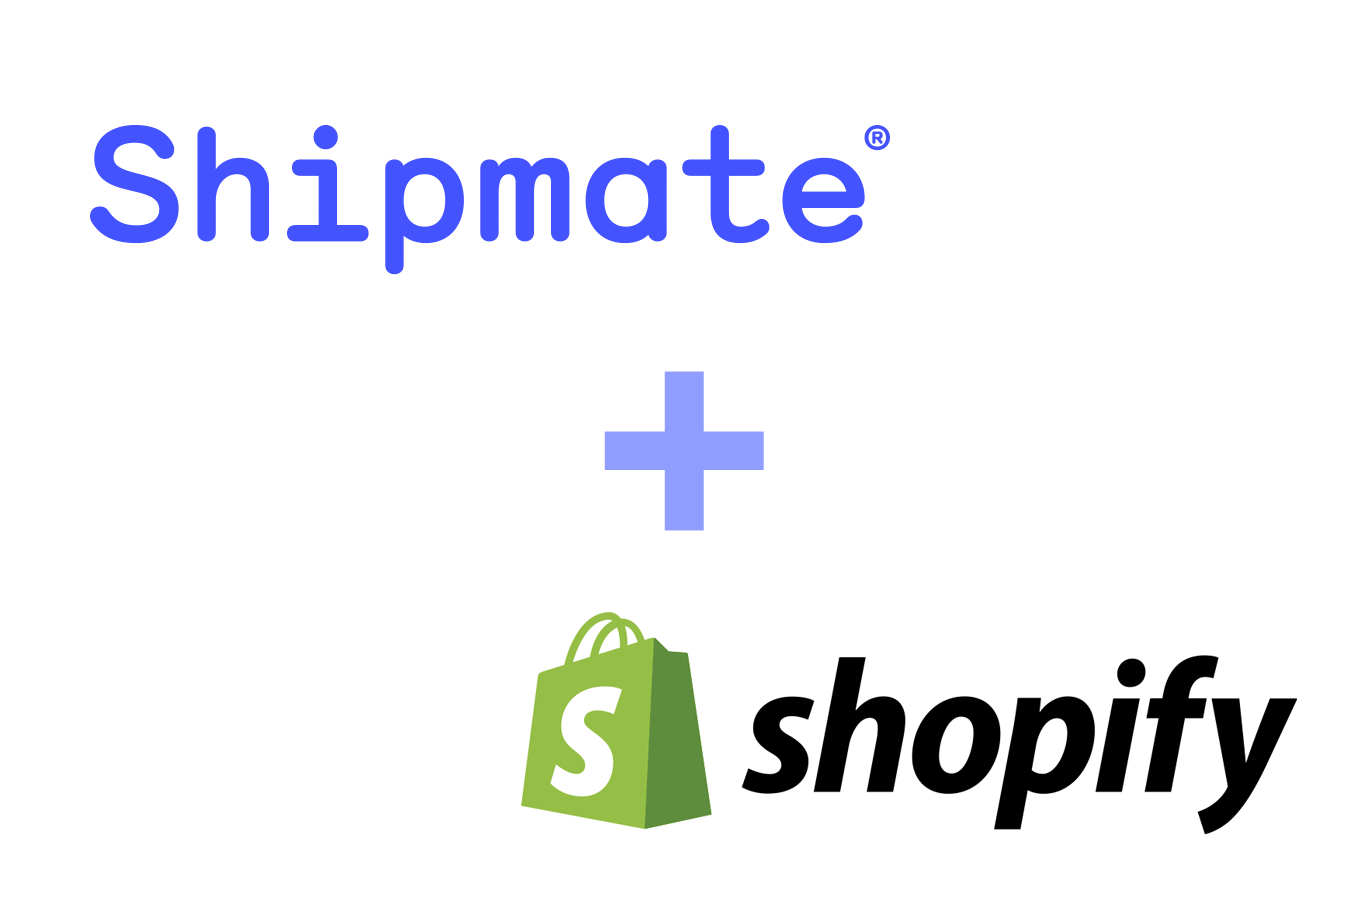 Shipmate - Shopify Plugin